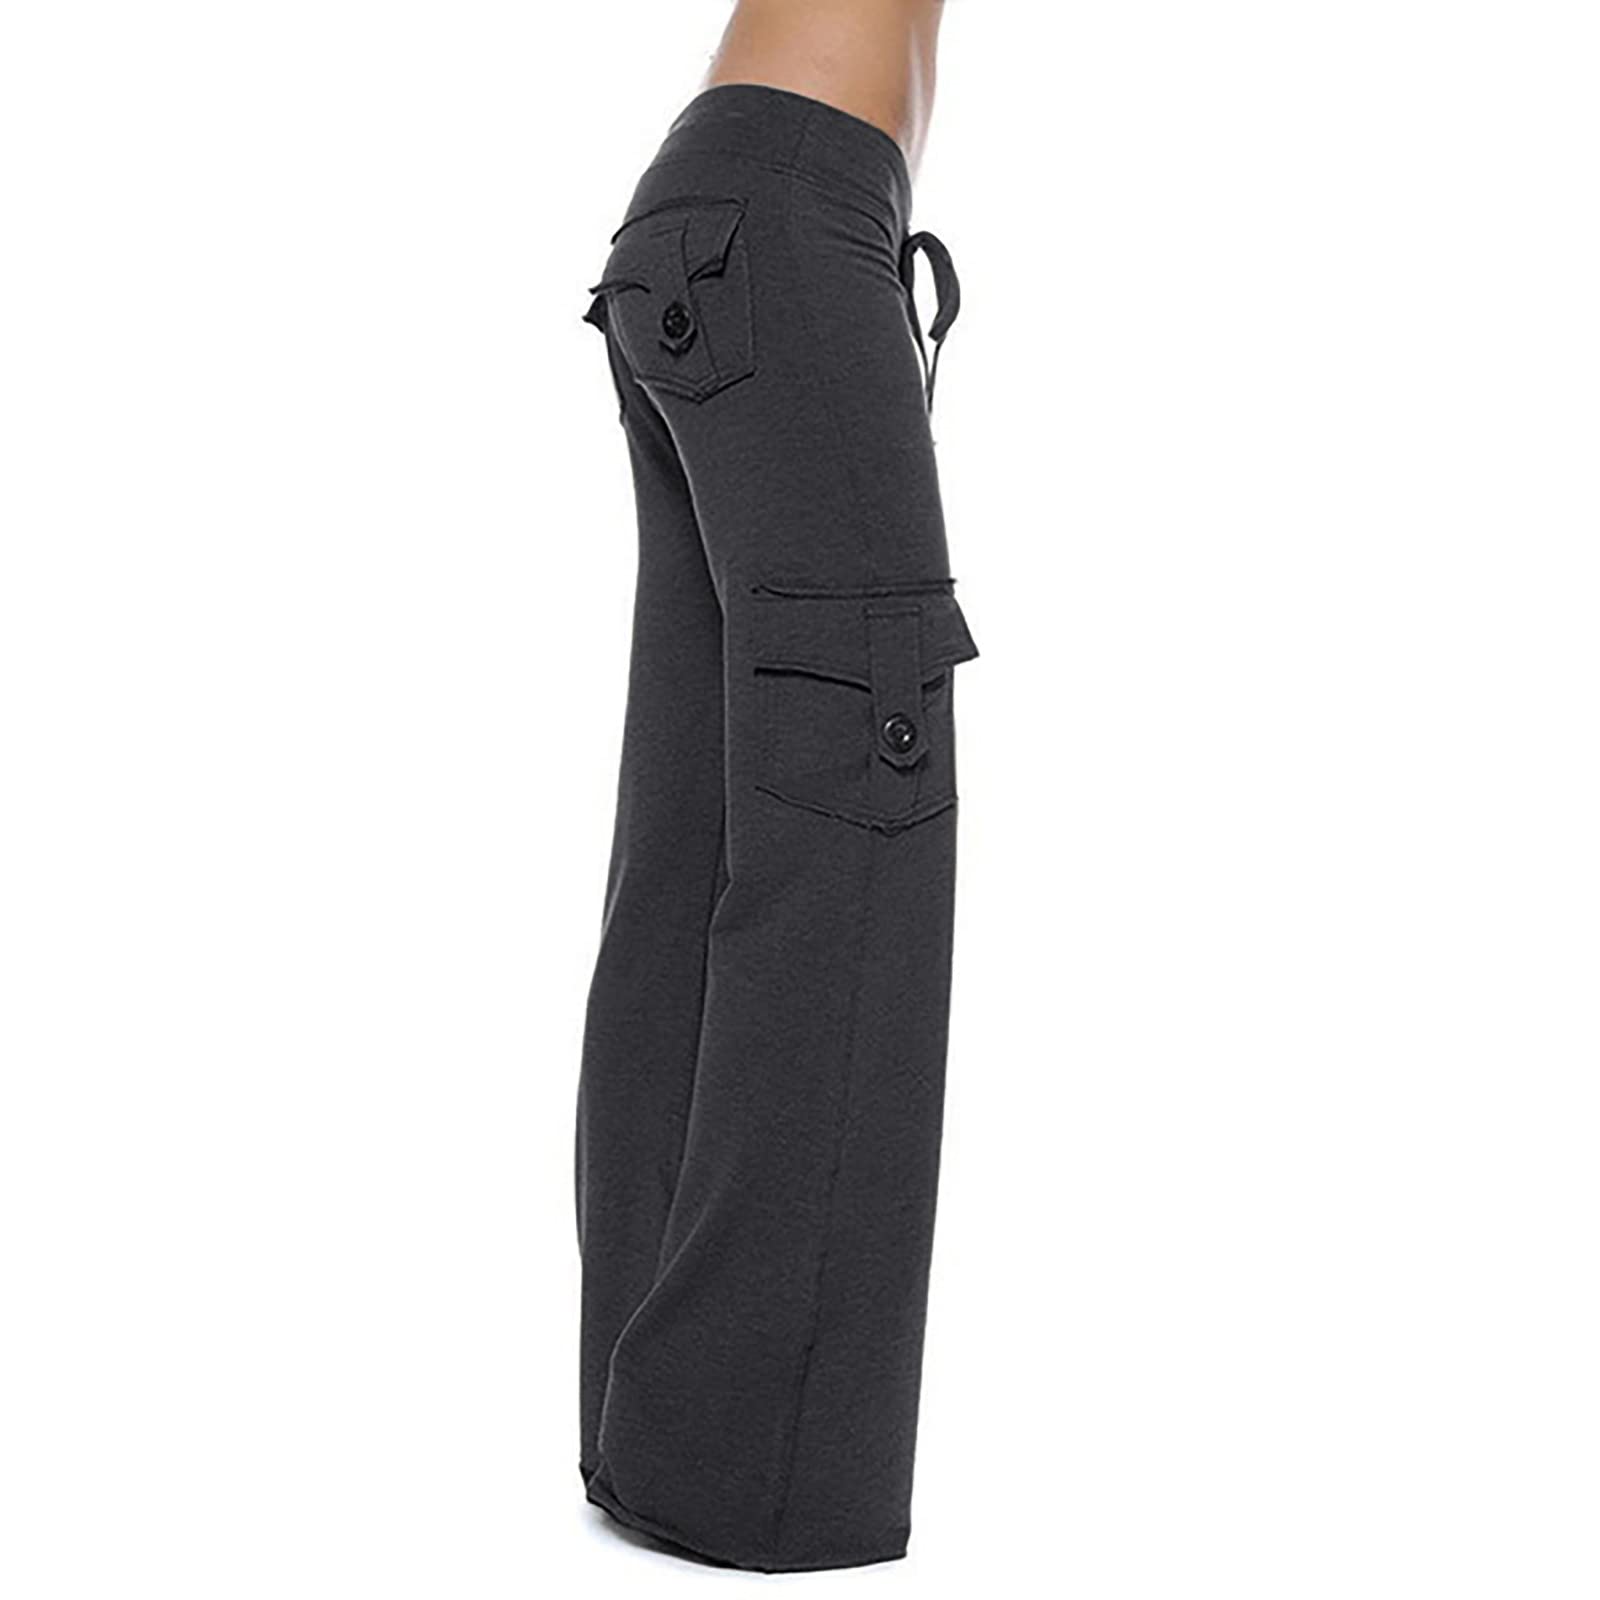  Capri Flare Leggings For Women - High Waist Tummy Control  Bootcut Yoga Pants Workout Flare Capris Pants Dark Gray